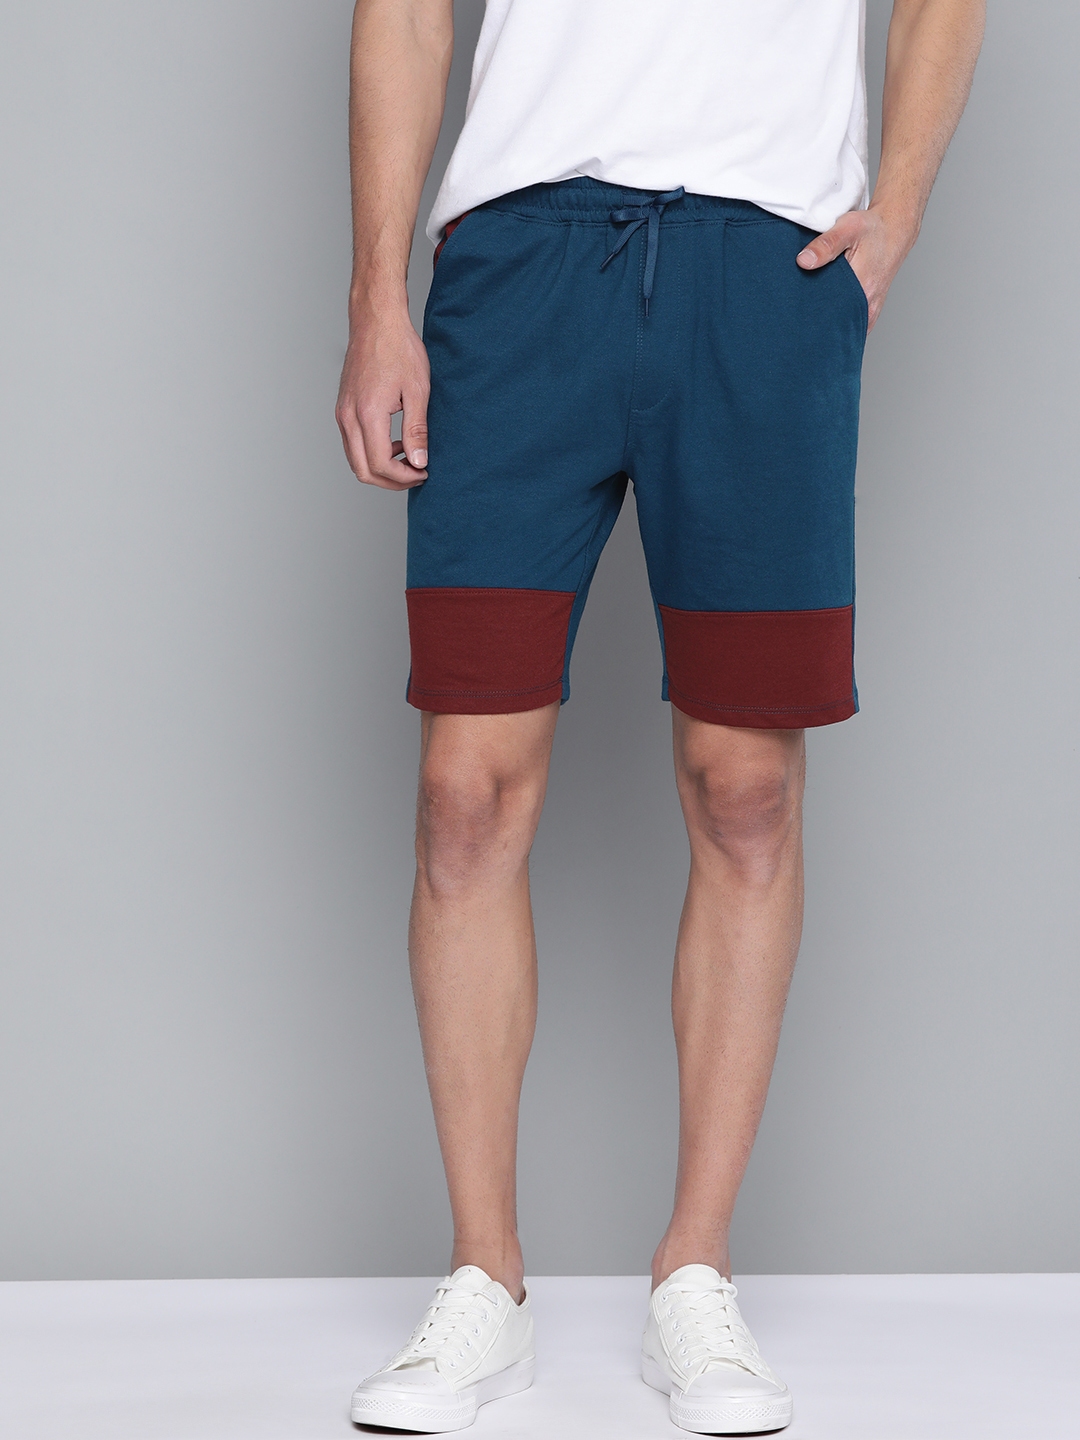 Buy Mast & Harbour Men Teal Blue & Brown Colourblocked Shorts - Shorts ...